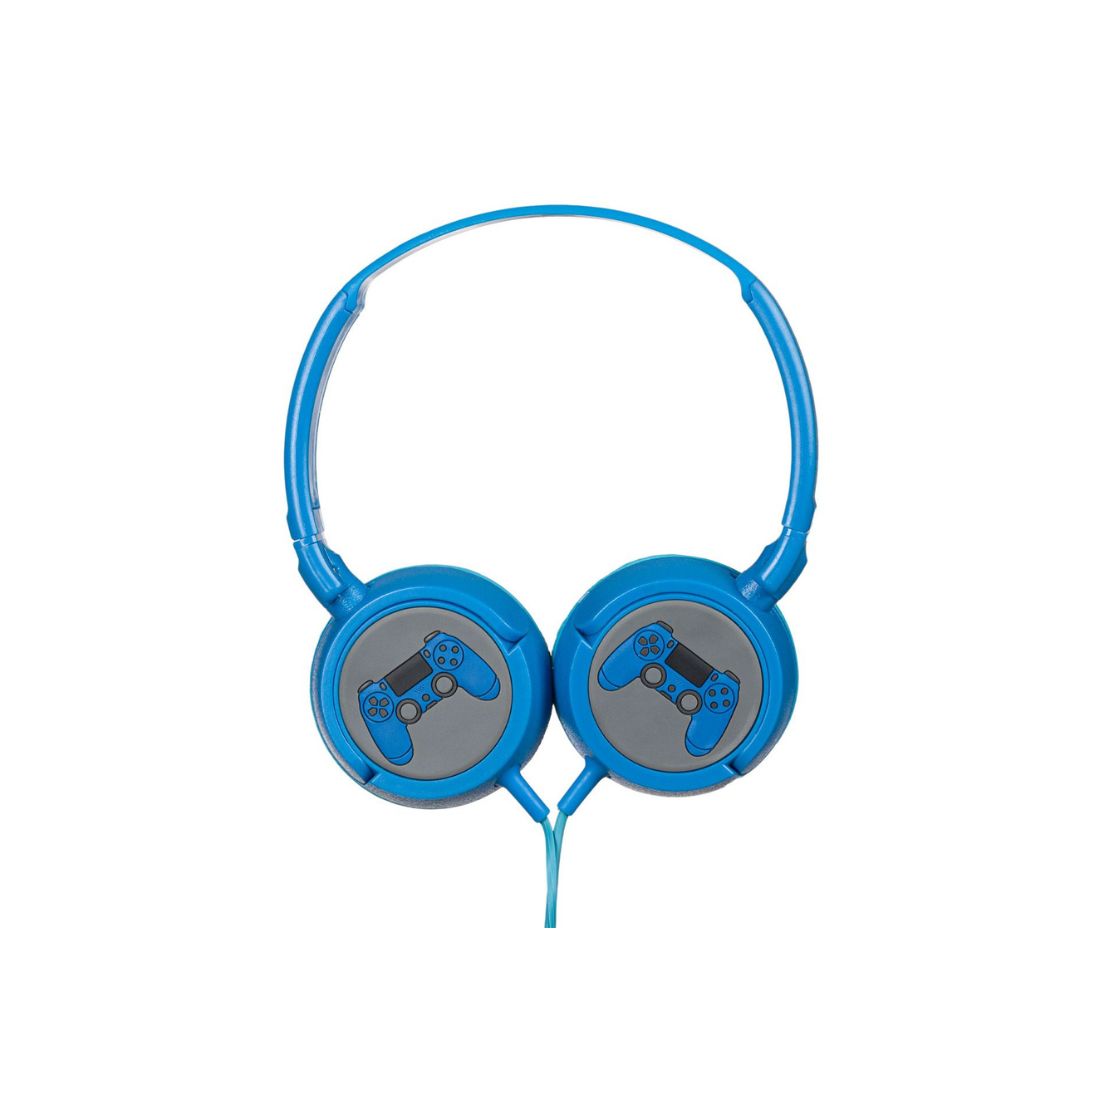 Blue Headphones with Controller Design